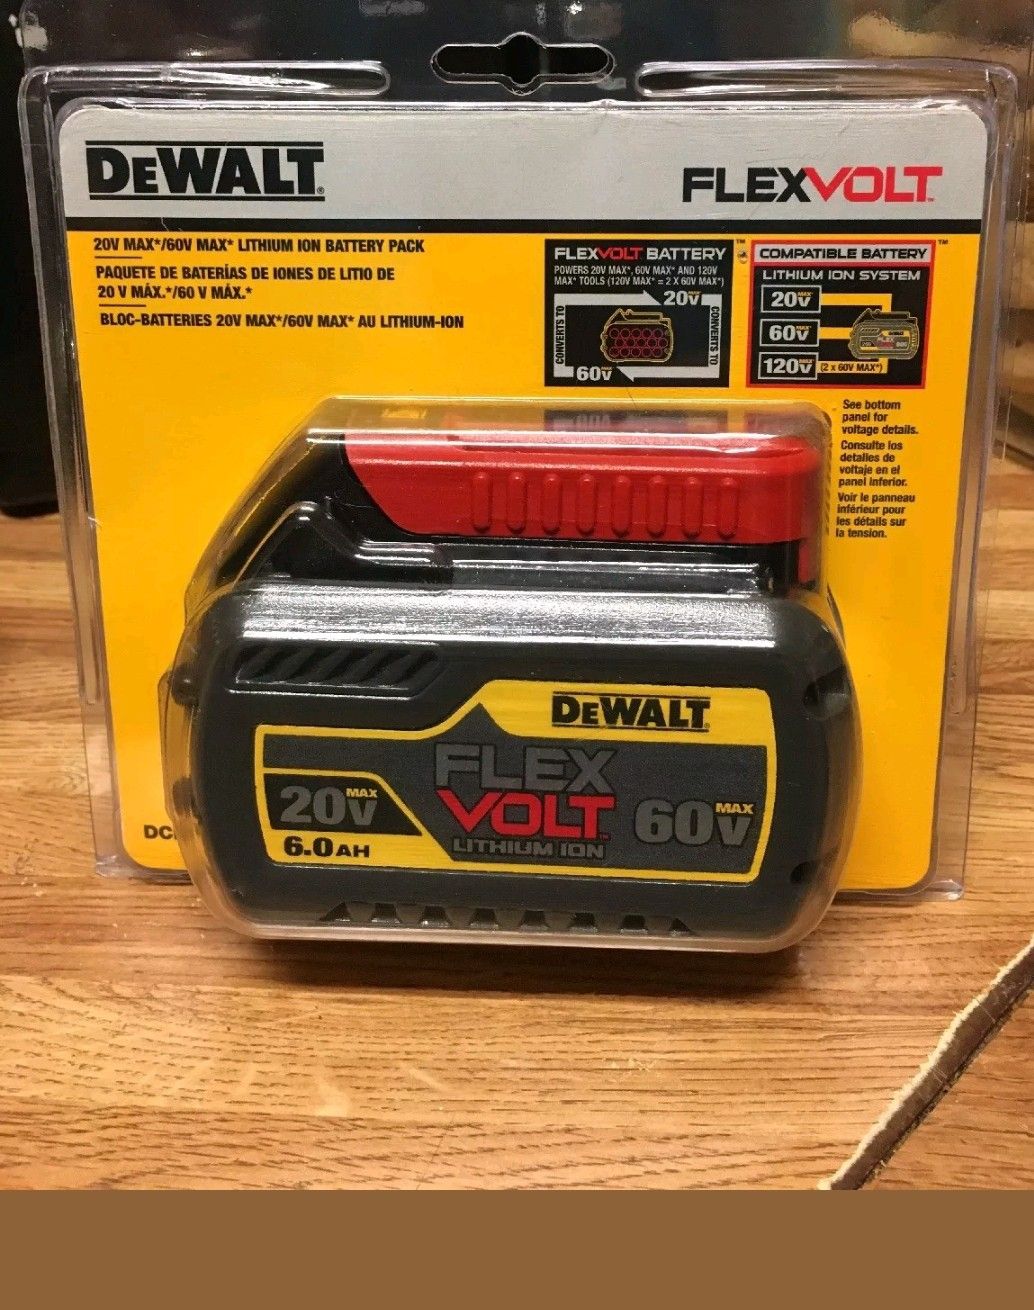 1 Dewalt bateria flexvolt 60v